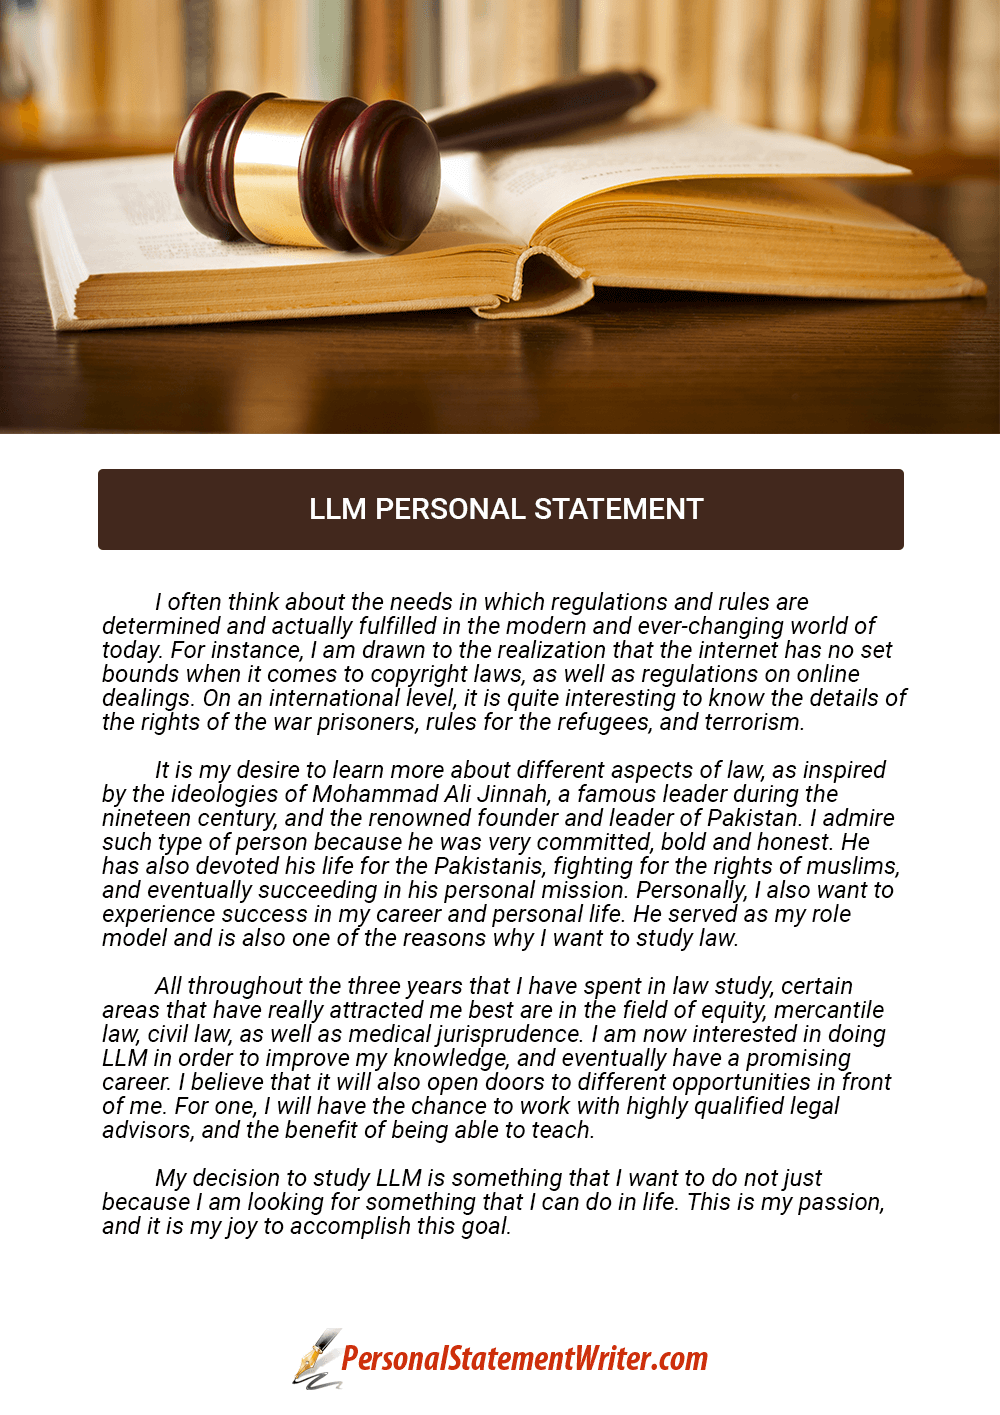 Llm personal statement samples